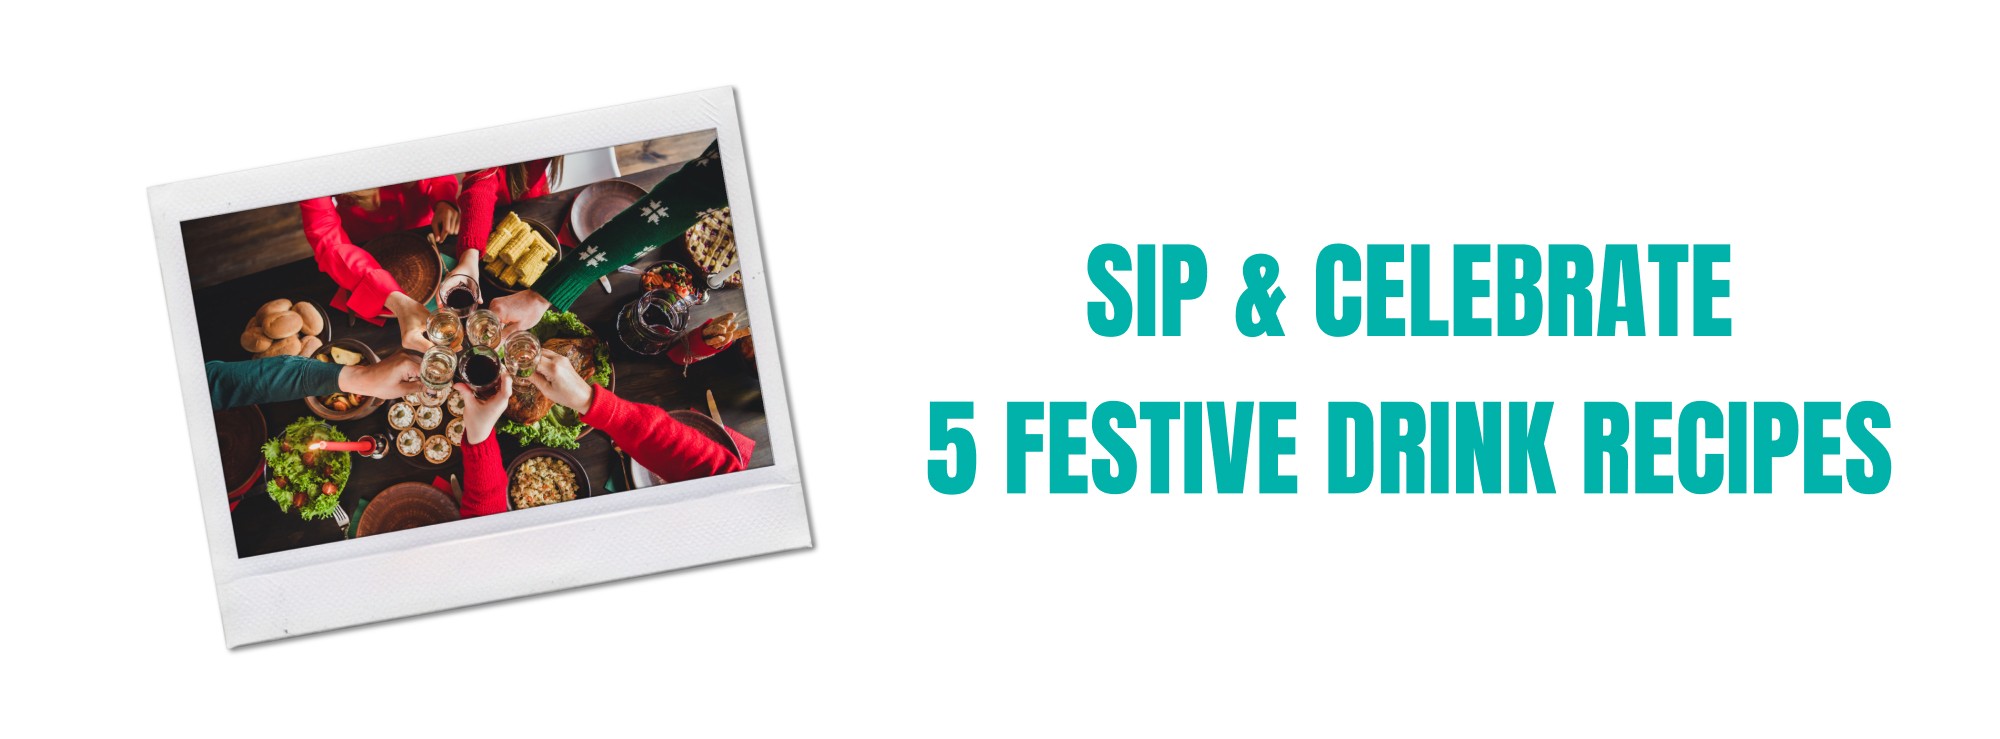 Sip & Celebrate: 5 Festive Holiday Drink Recipes 